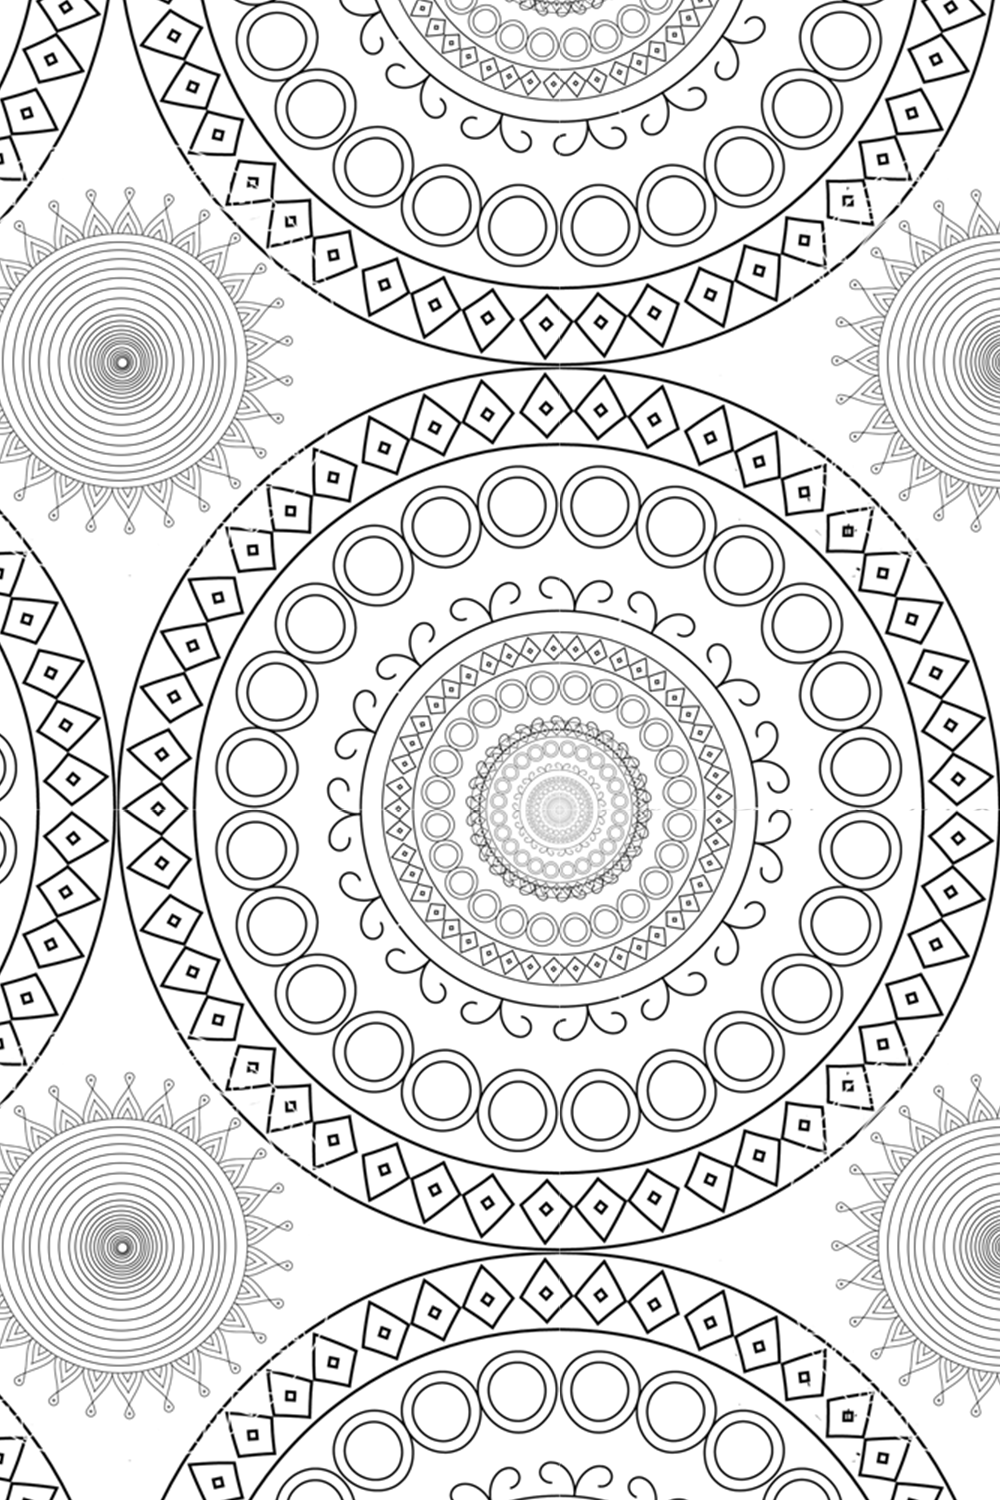 Mandala design black and white texture pinterest preview image.